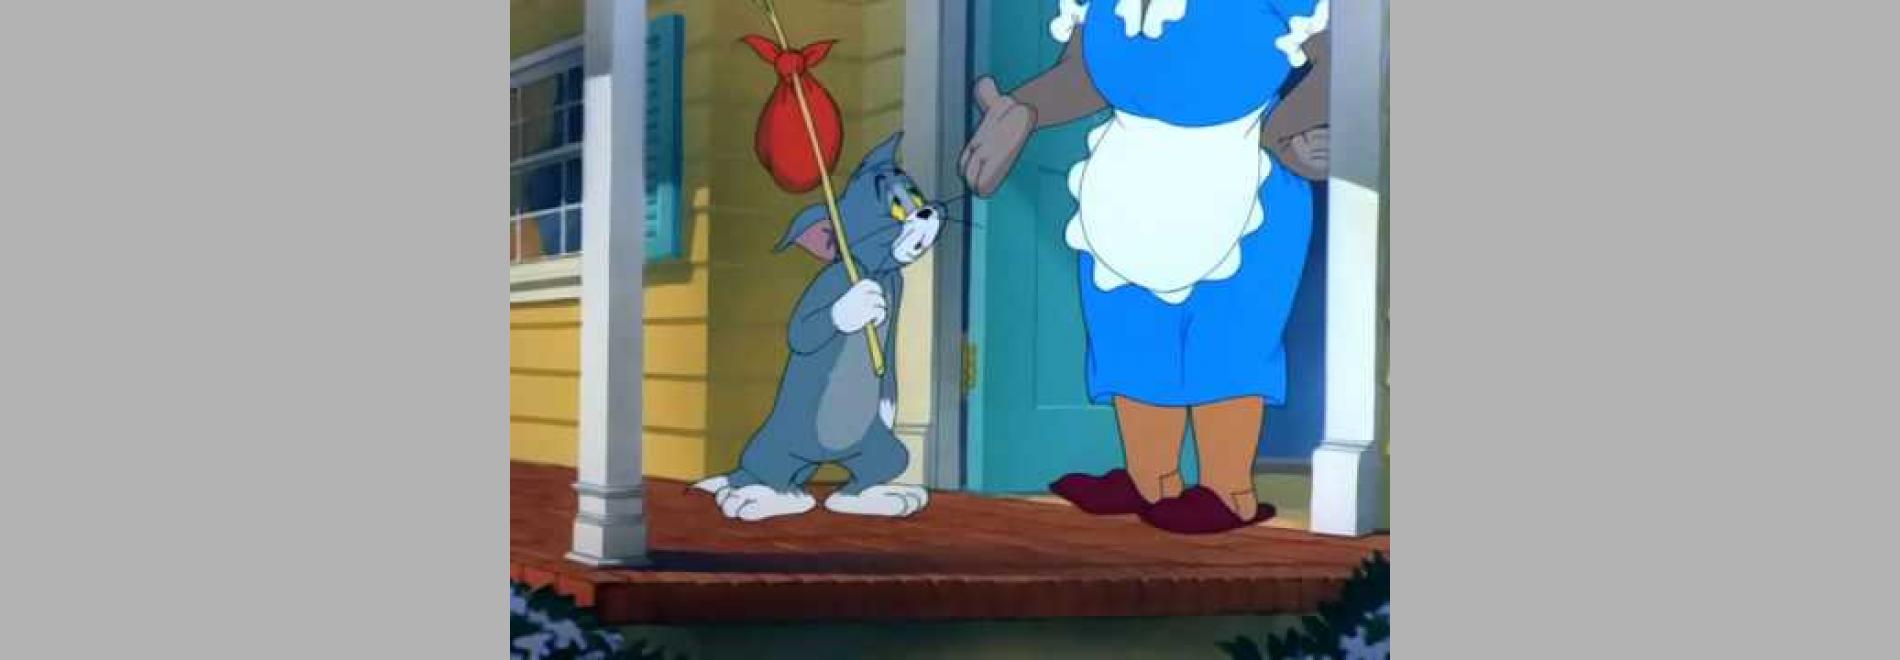 Tom i Jerry i Tex Avery: una antologia